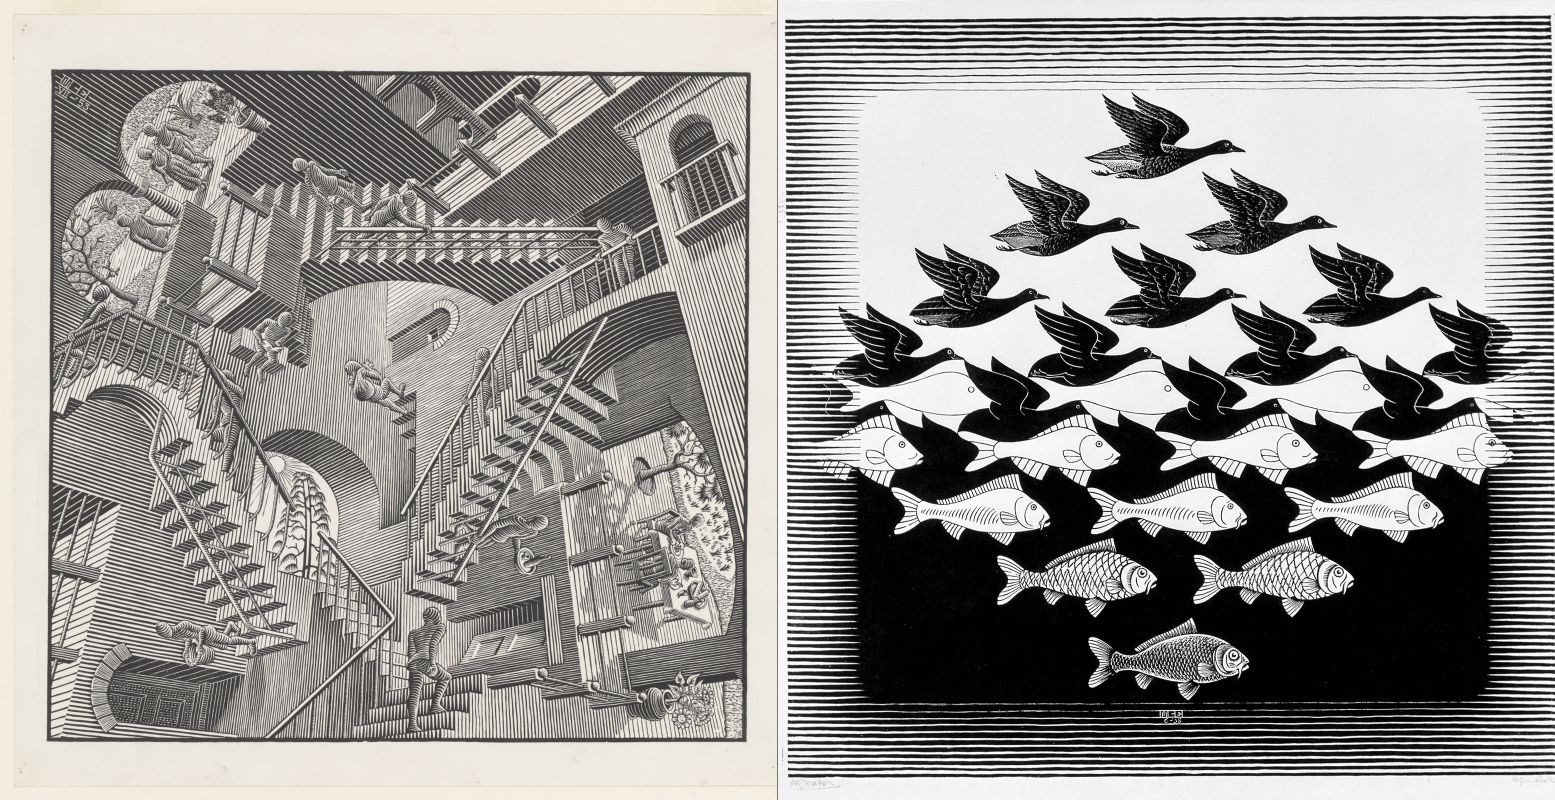 Links: M.C. Escher, Relativiteit, 1953, houtsnede. Collectie Kunstmuseum Den Haag. Foto: © The M.C. Escher Company â€“ Baarn â€“ Holland. All rights reserved. www.mcescher.com. Rechts: M.C. Escher, Lucht en water I, 1938, houtsnede. Collectie Kunstmuseum Den Haag. © The M.C. Escher Company â€“ Baarn â€“ Holland. All rights reserved. www.mcescher.com